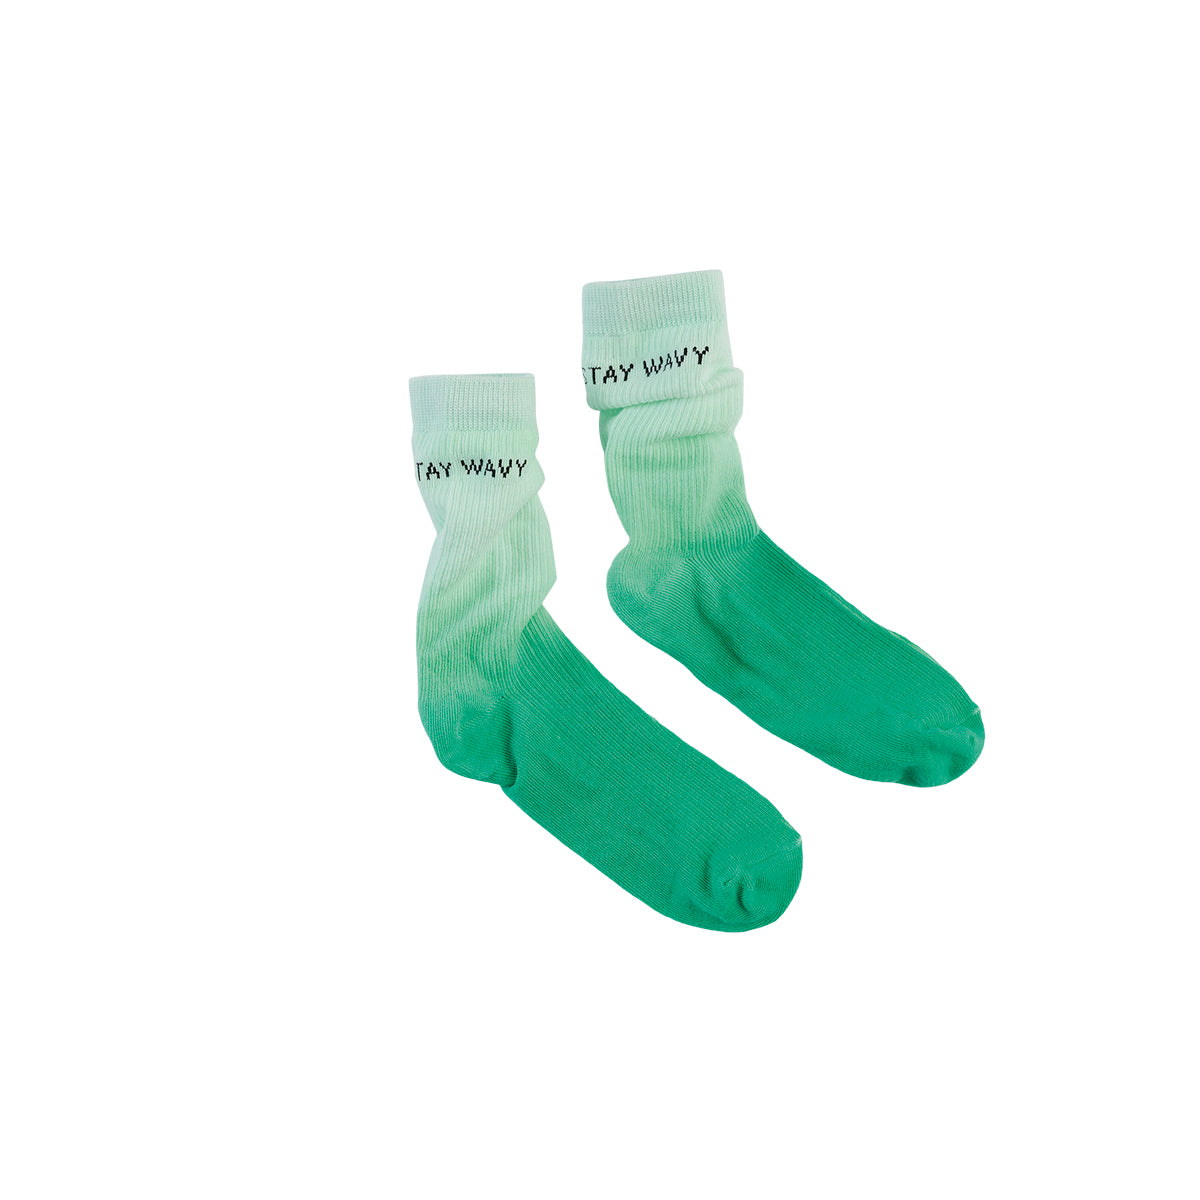 Z8 Socks Daks Fresh mint